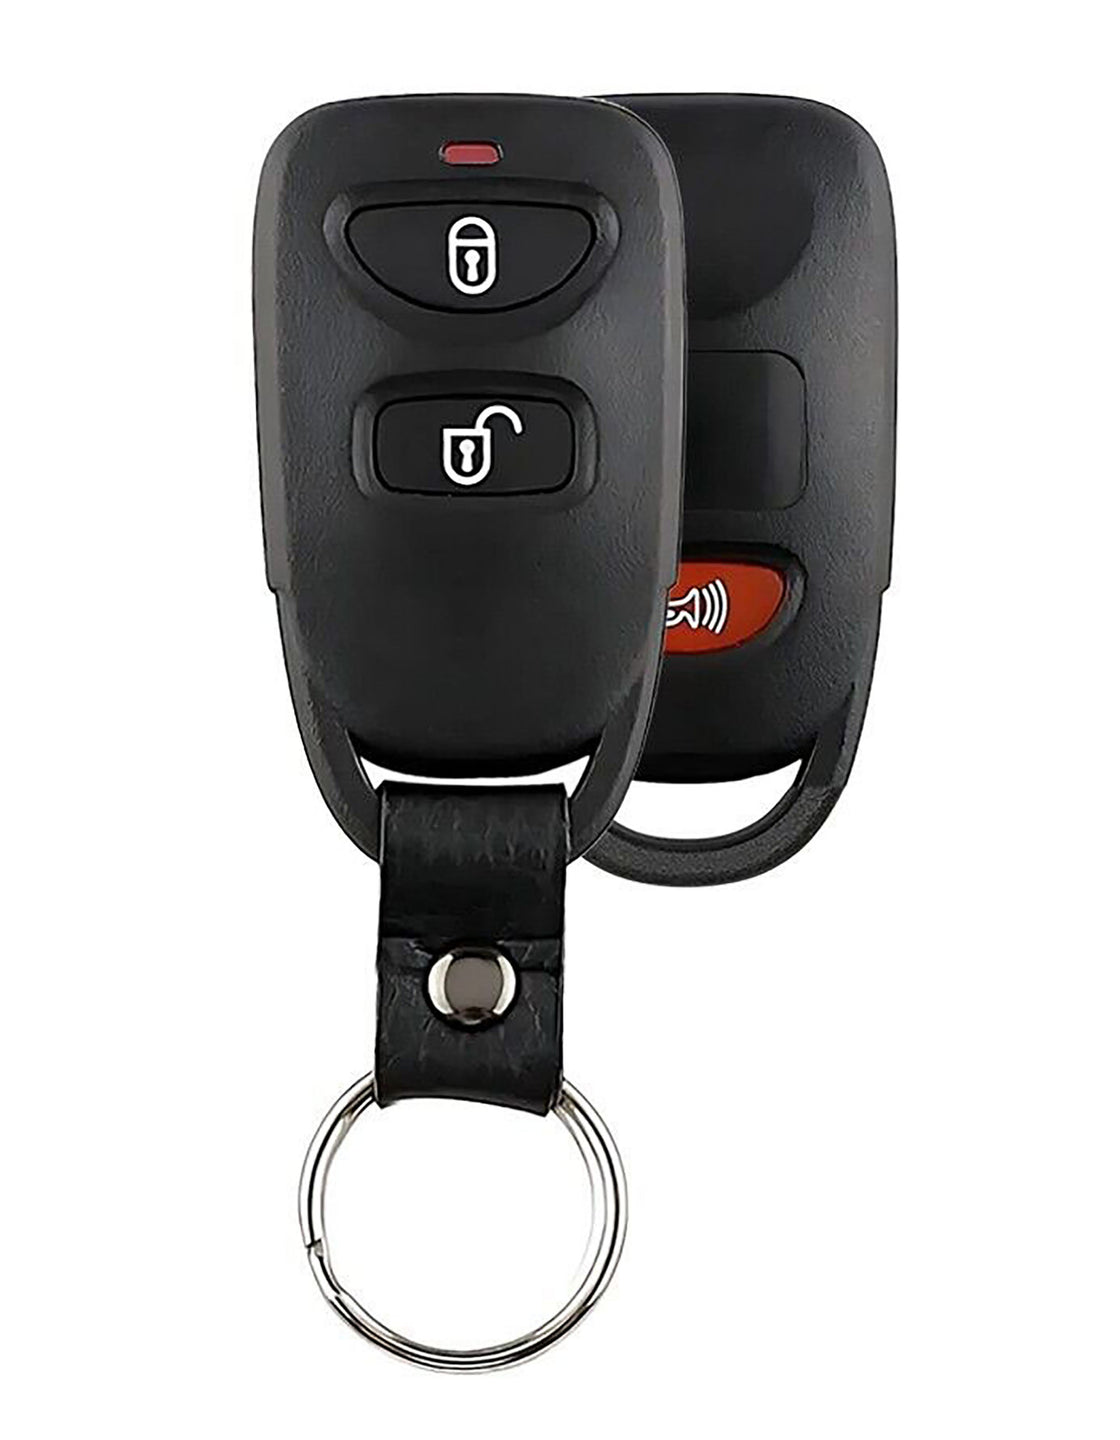 1x New Replacement Key Fob Remote Compatible with & Fit For 2006-2011 Kia Rio / 2011-2013 Kia Sorento - MPN PINHA-T036-02